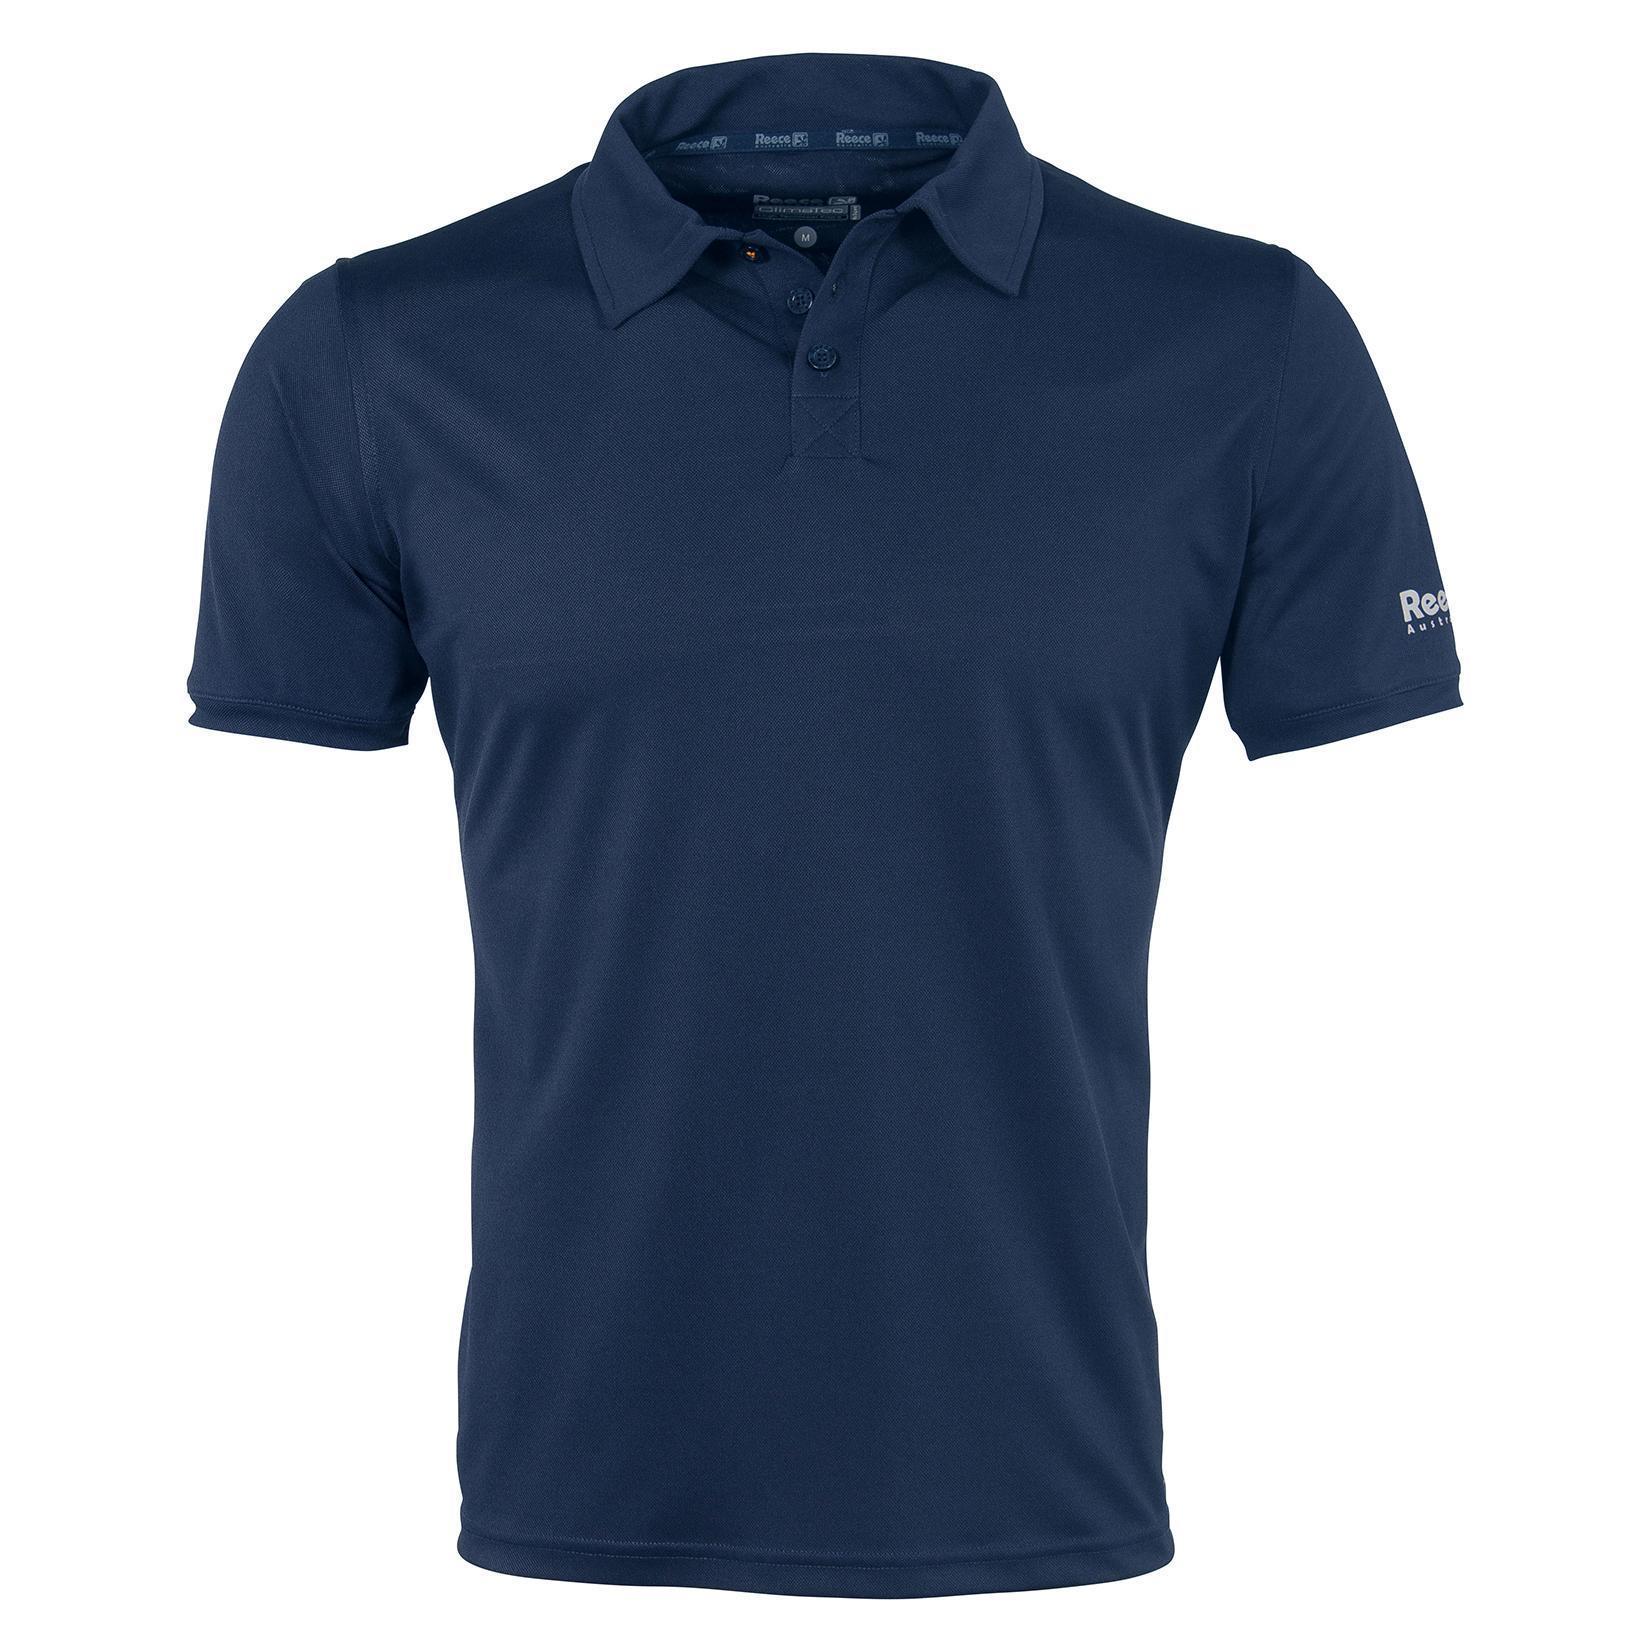 Reece Darwin Climatec Polo Shirt Unisex - Kitlocker.com